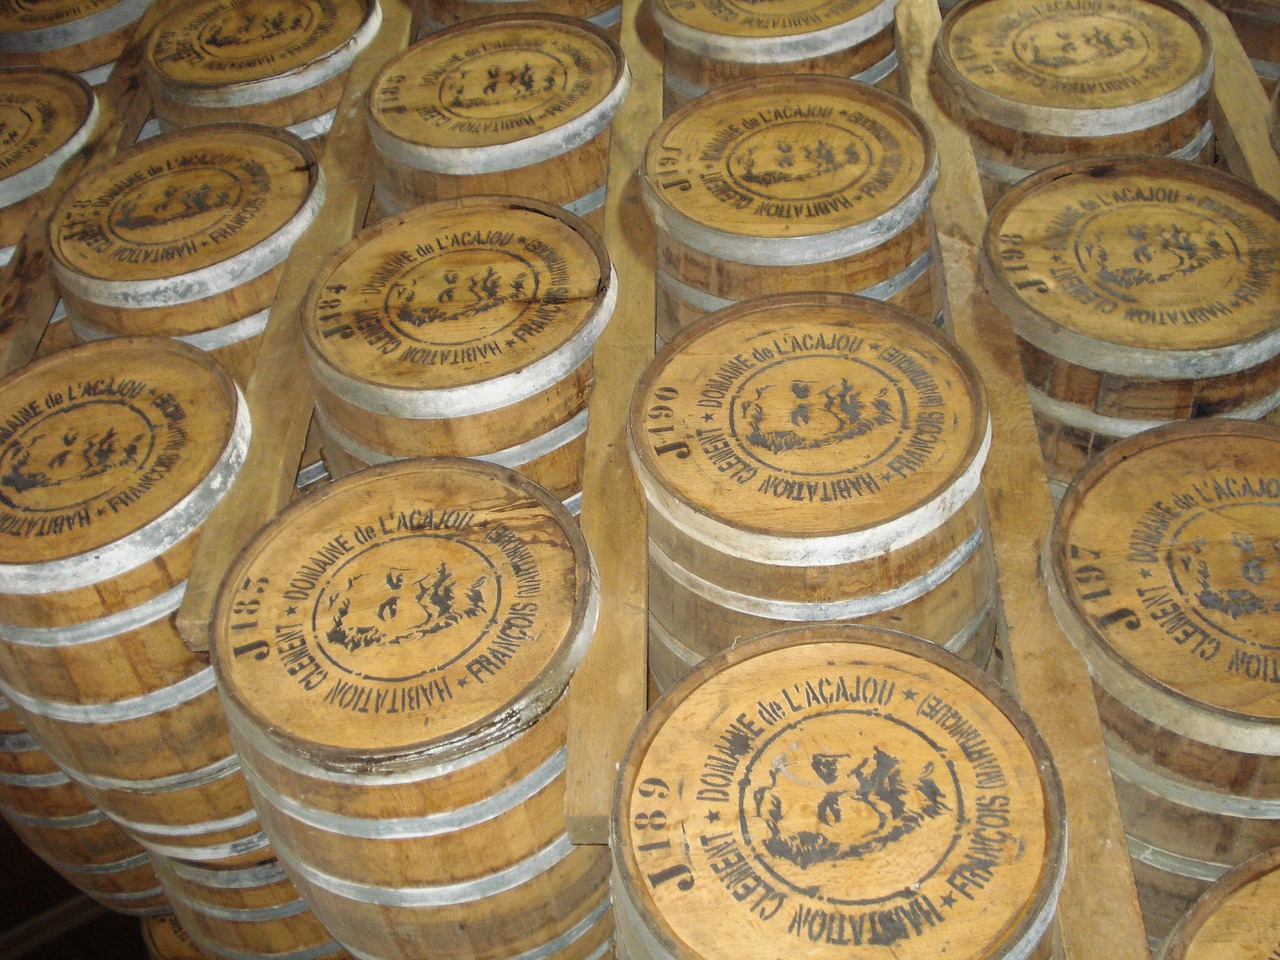 martinique rhumerie wooden barrels free photo